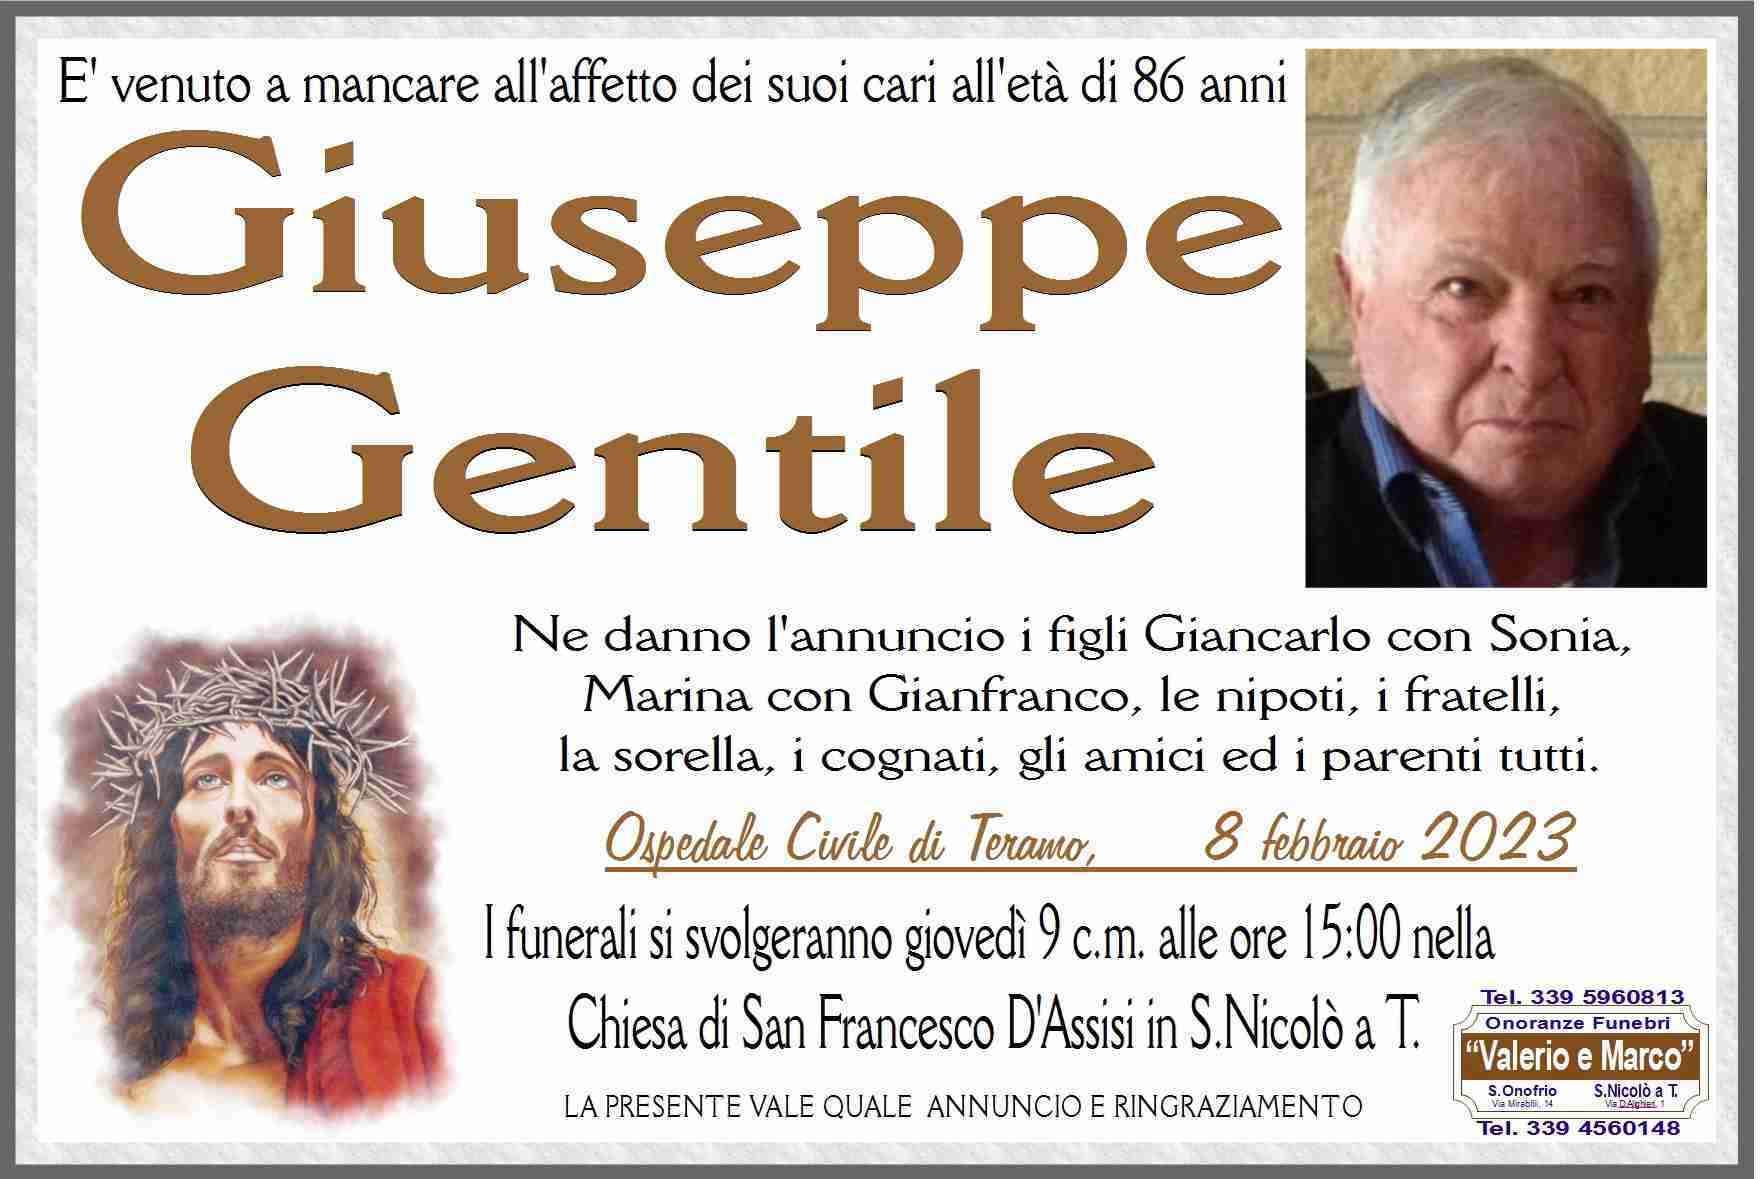 Giuseppe Gentile